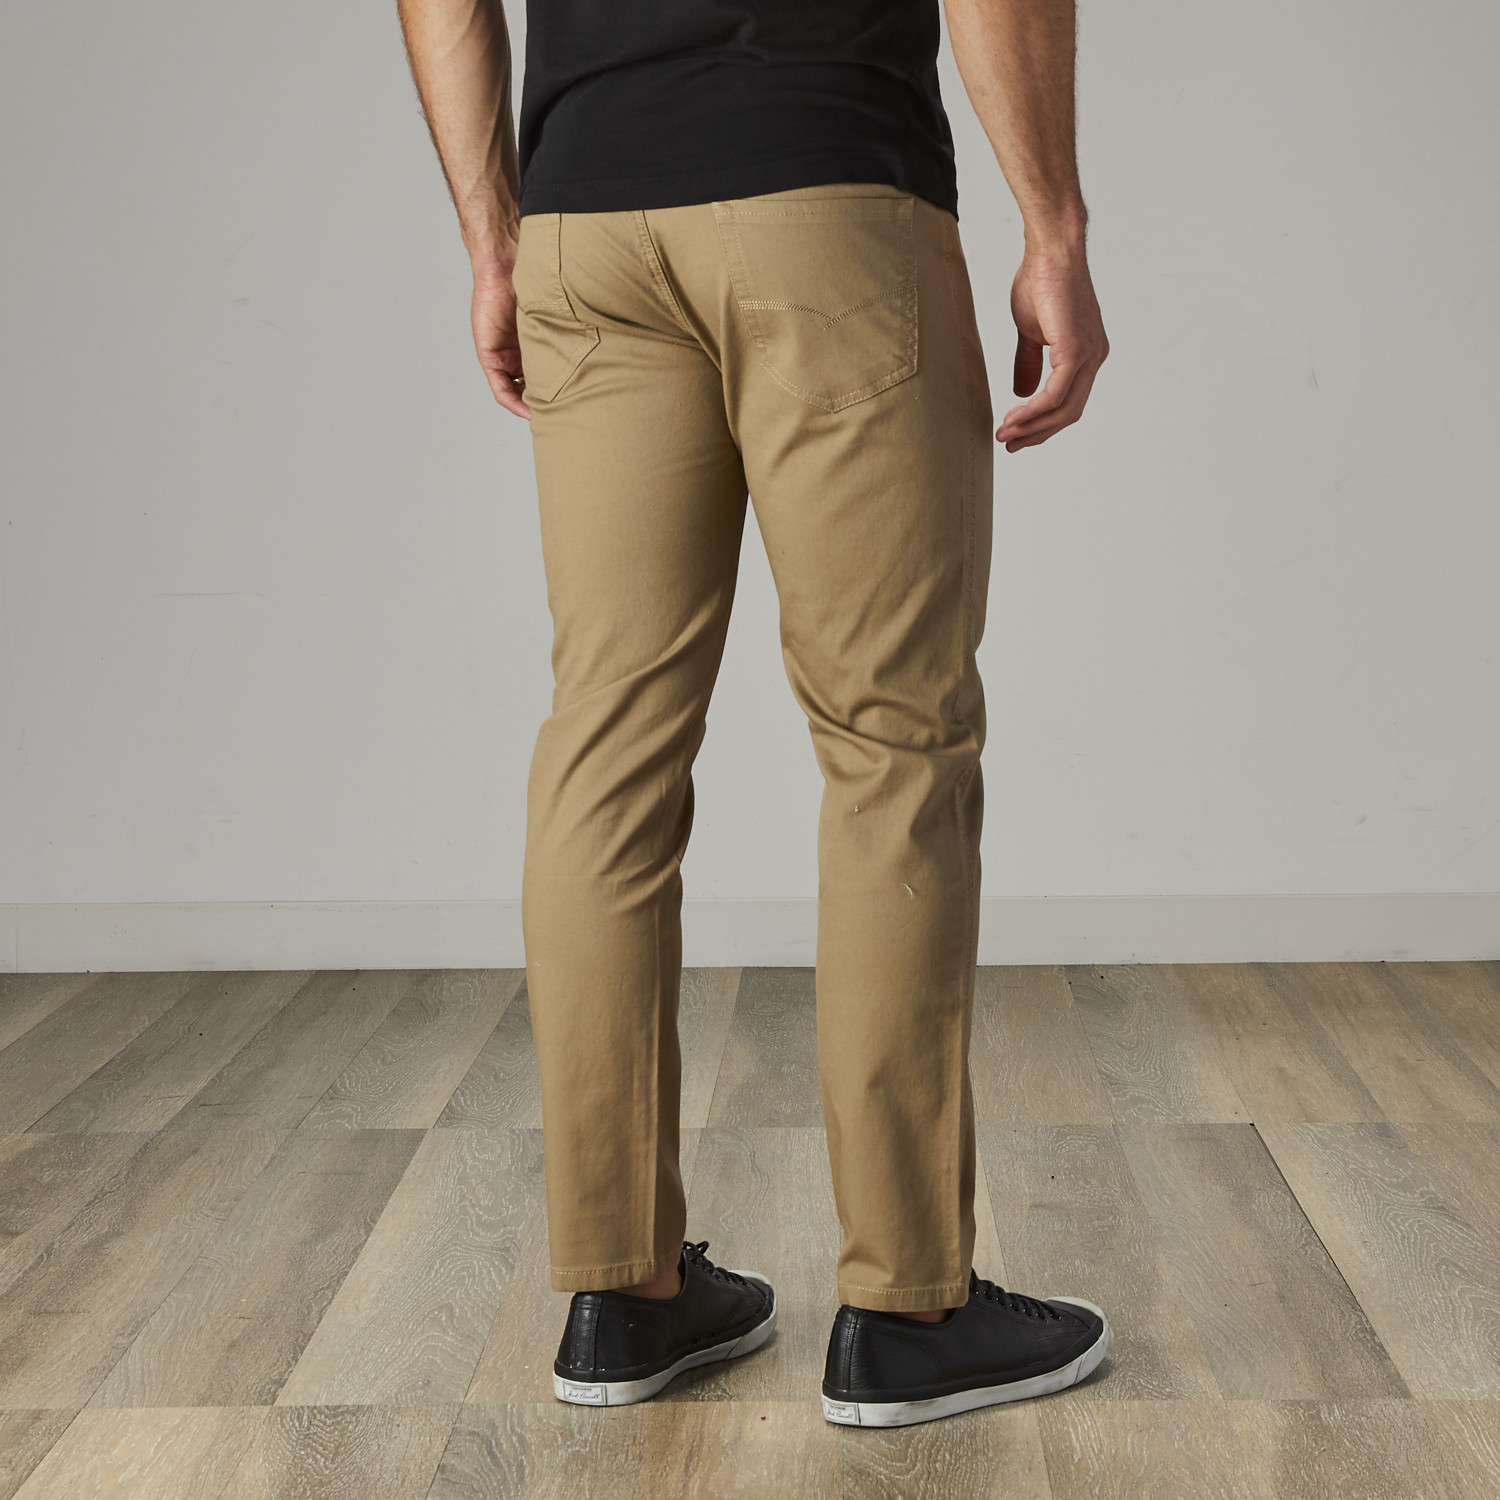 Men's Jean Cut Slim Fit Pants // Dark Khaki (30WX30L) - Xray Jeans ...